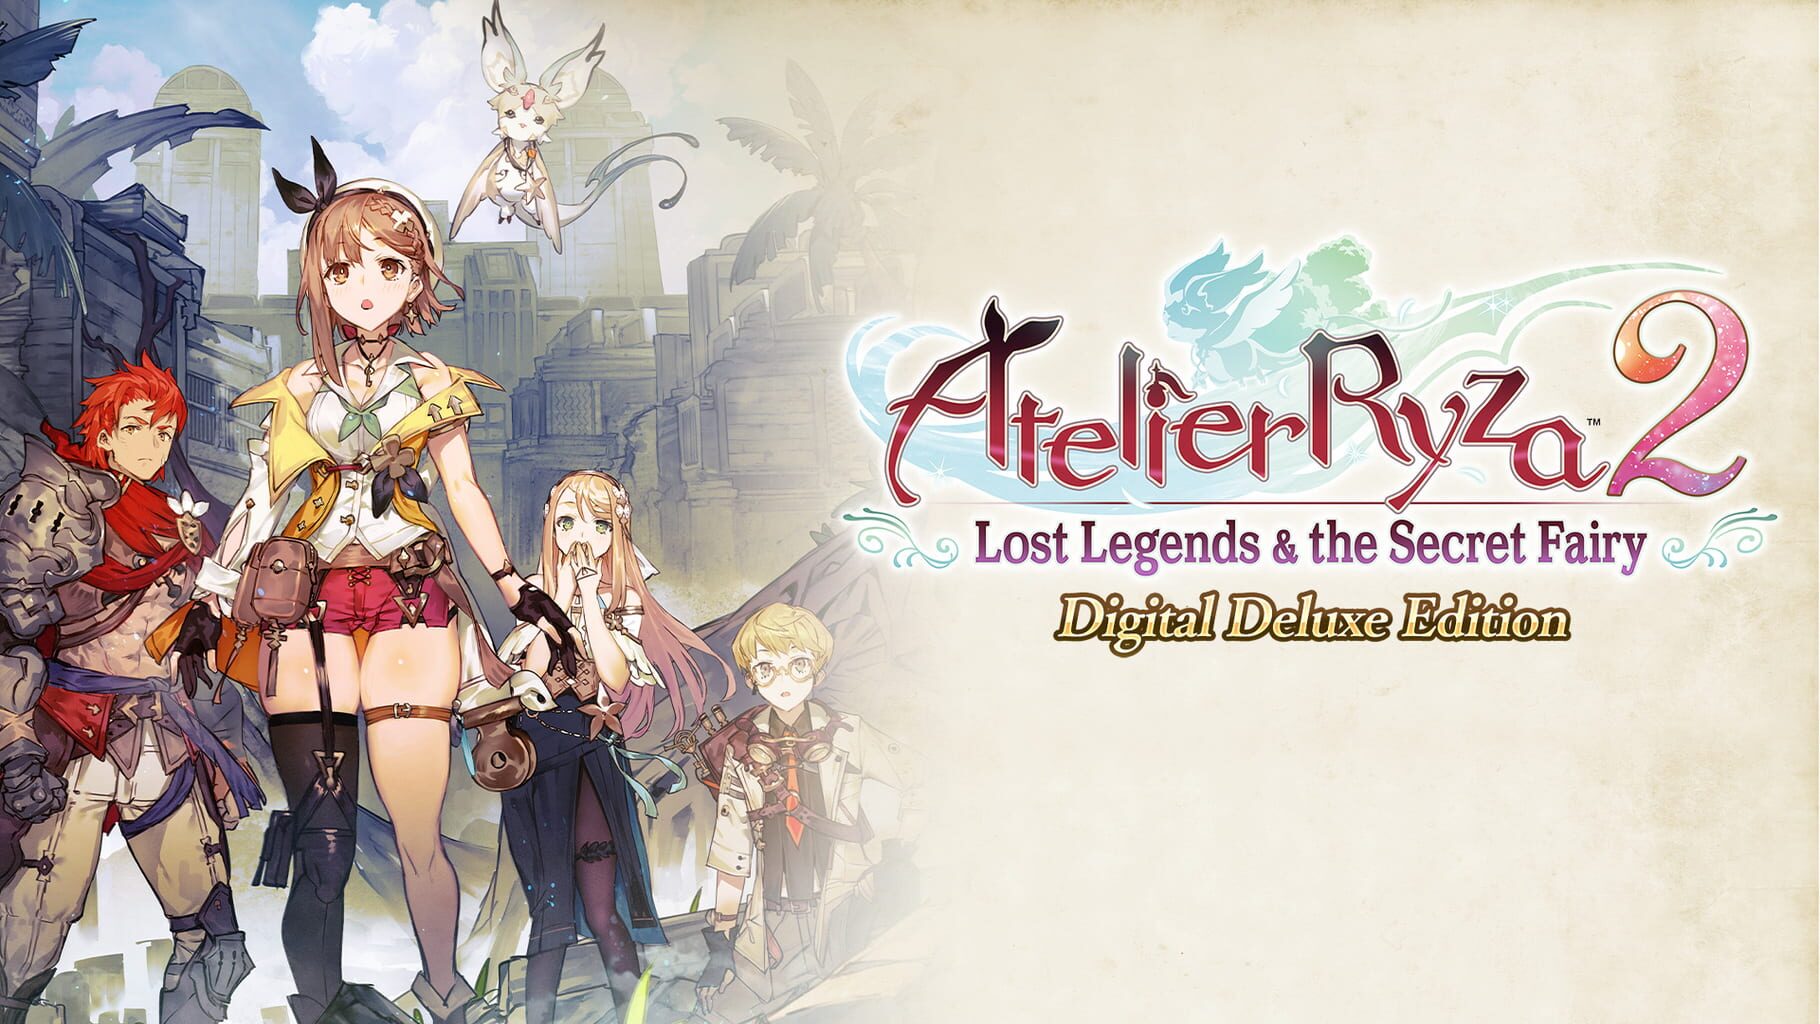 Atelier Ryza 2: Lost Legends & the Secret Fairy - Digital Deluxe Edition artwork